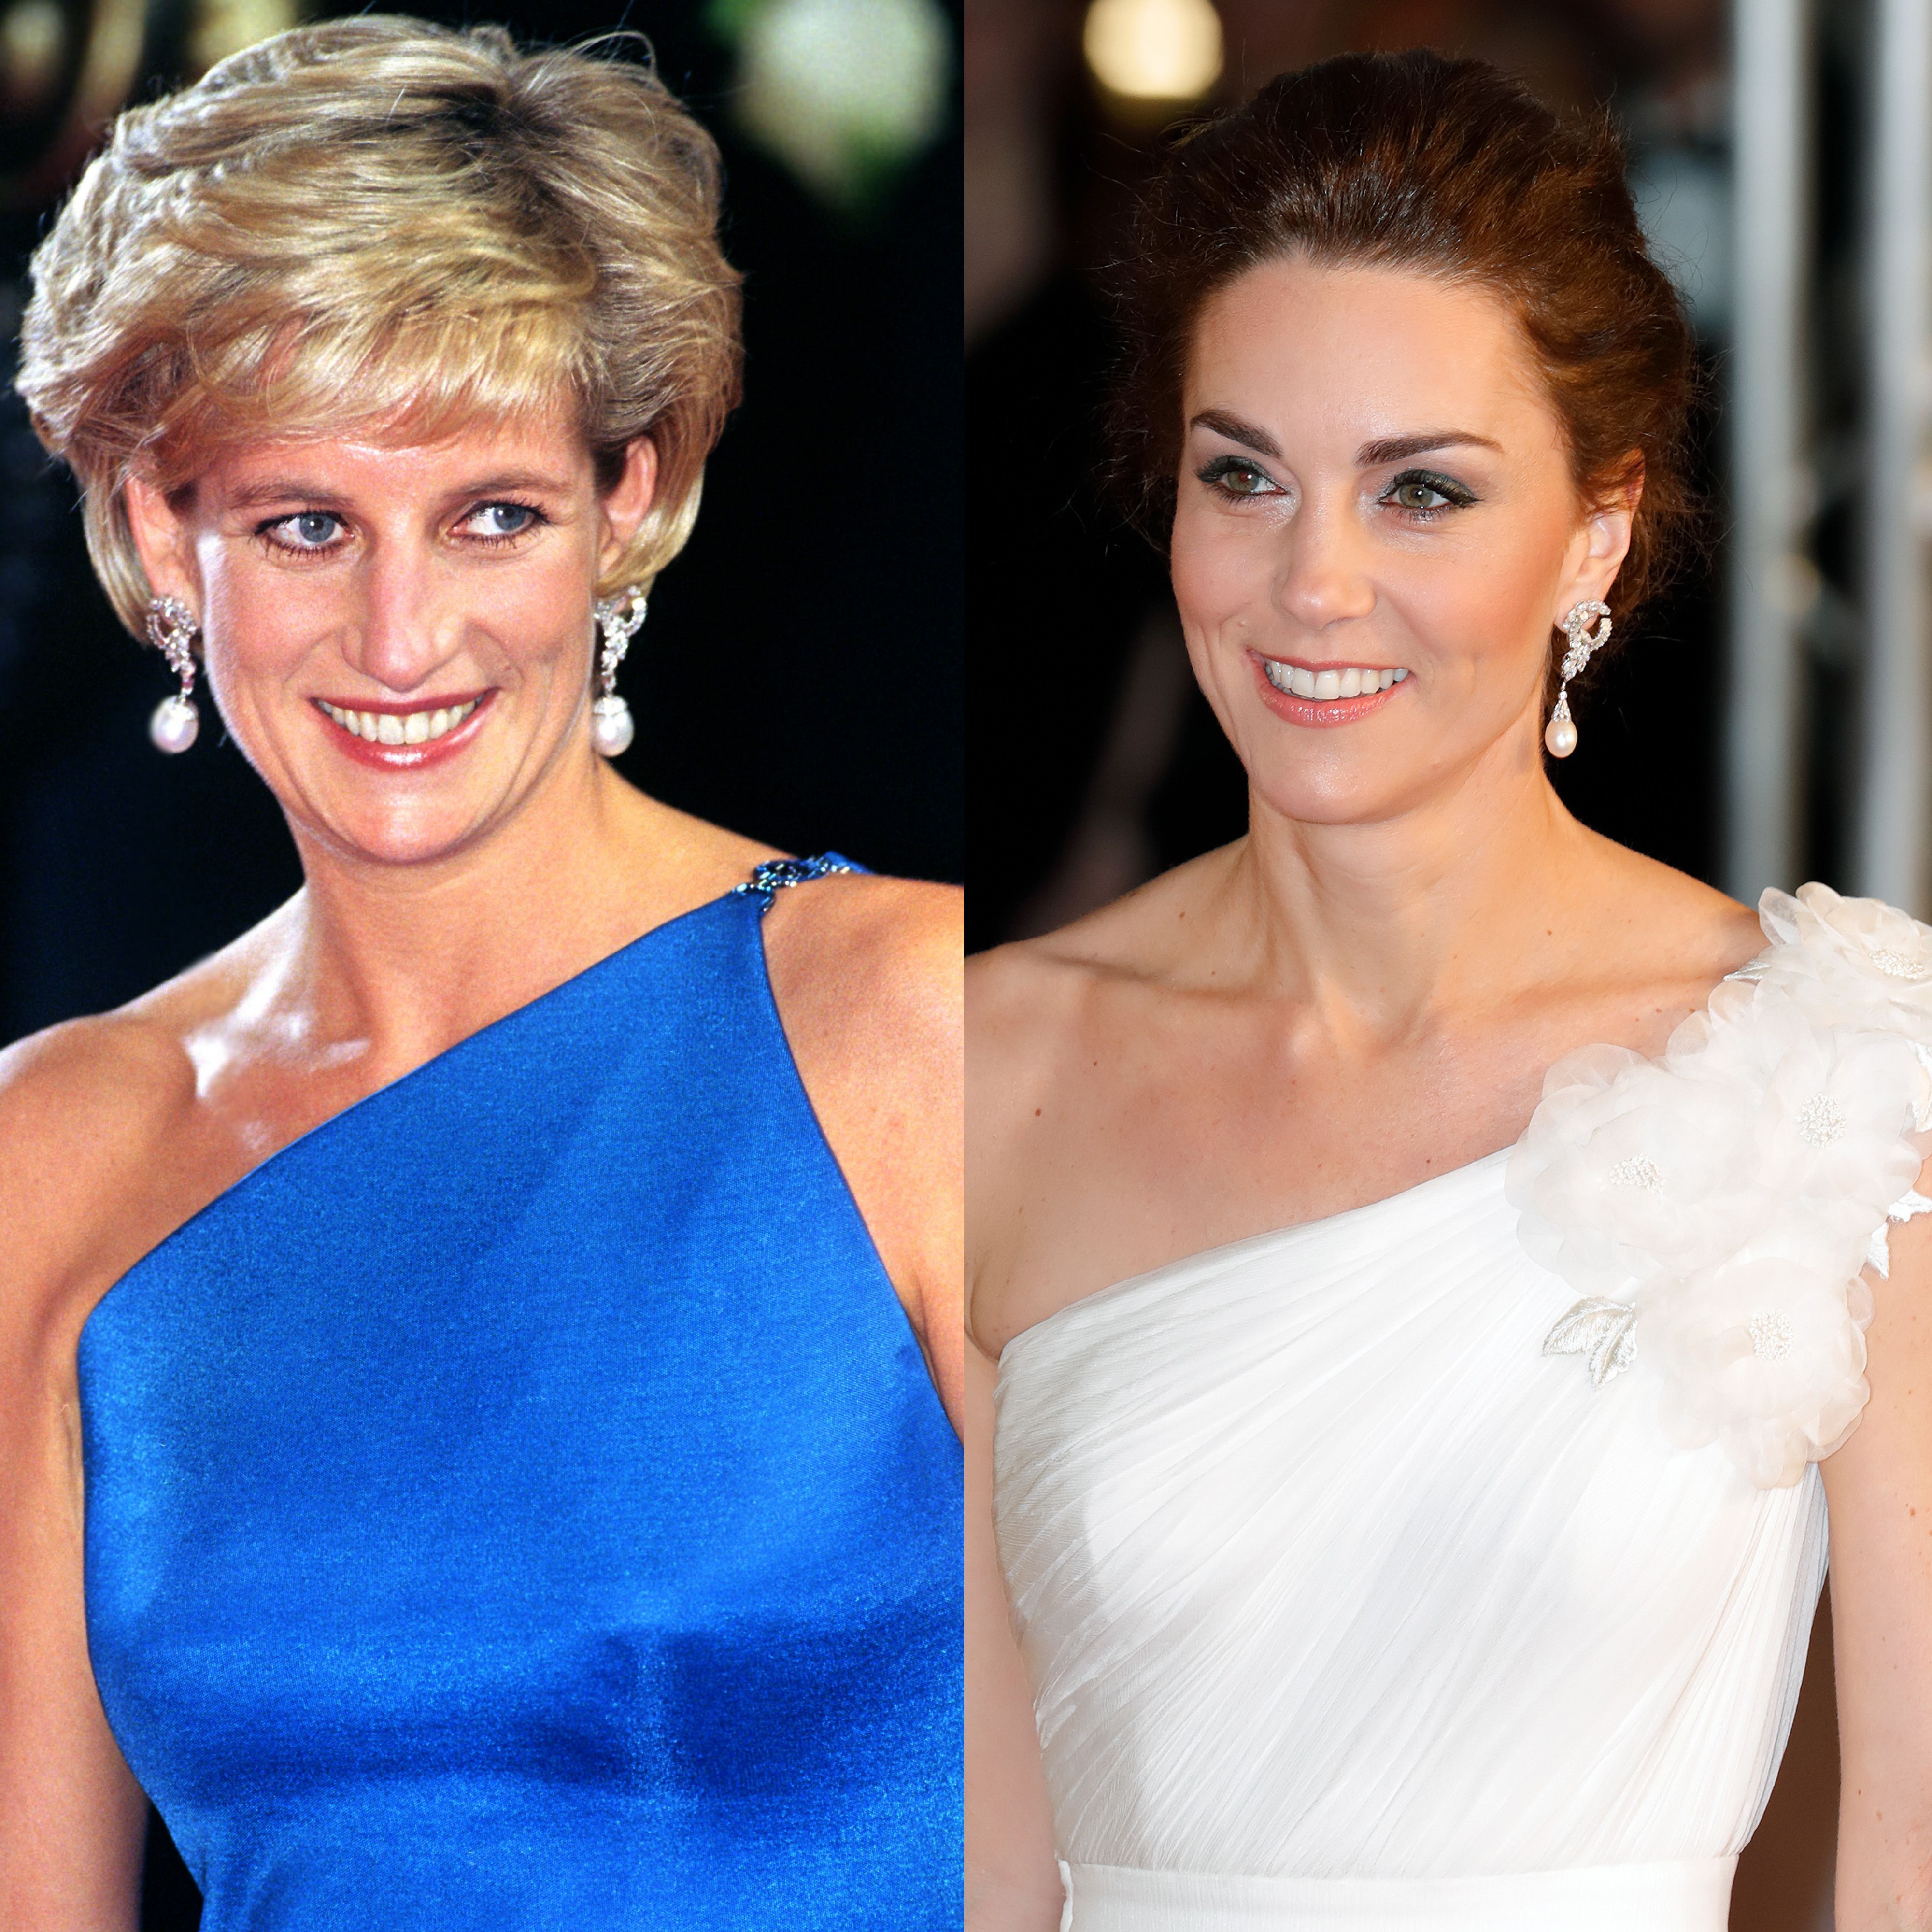 Does Kate wear Diana's jewelry?